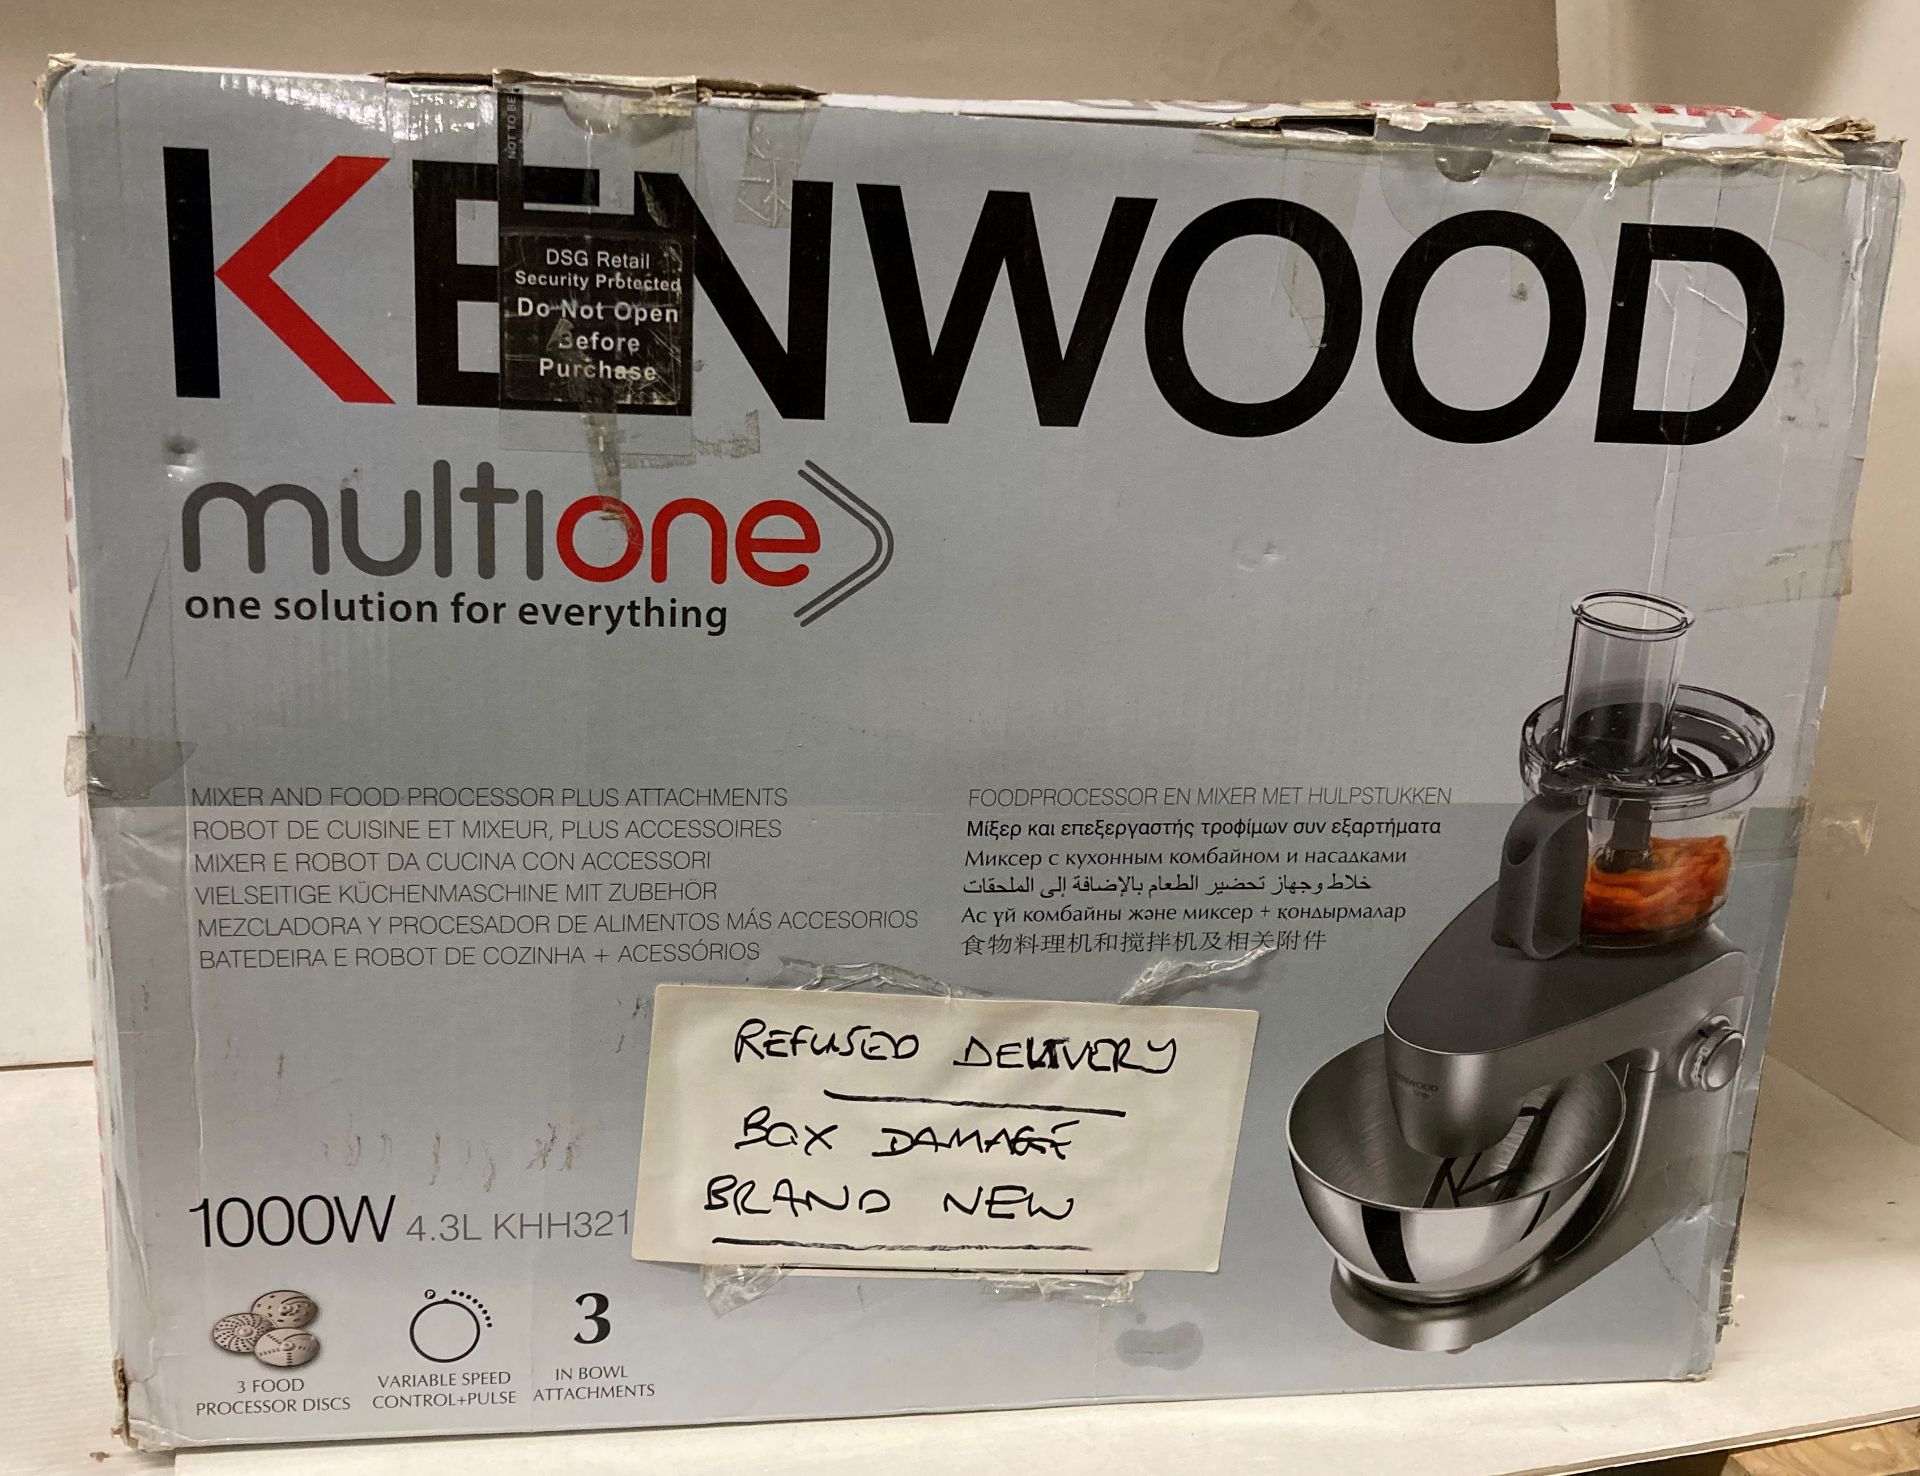 Kenwood Multione mixer and food processor plus attachments (saleroom location: J11)